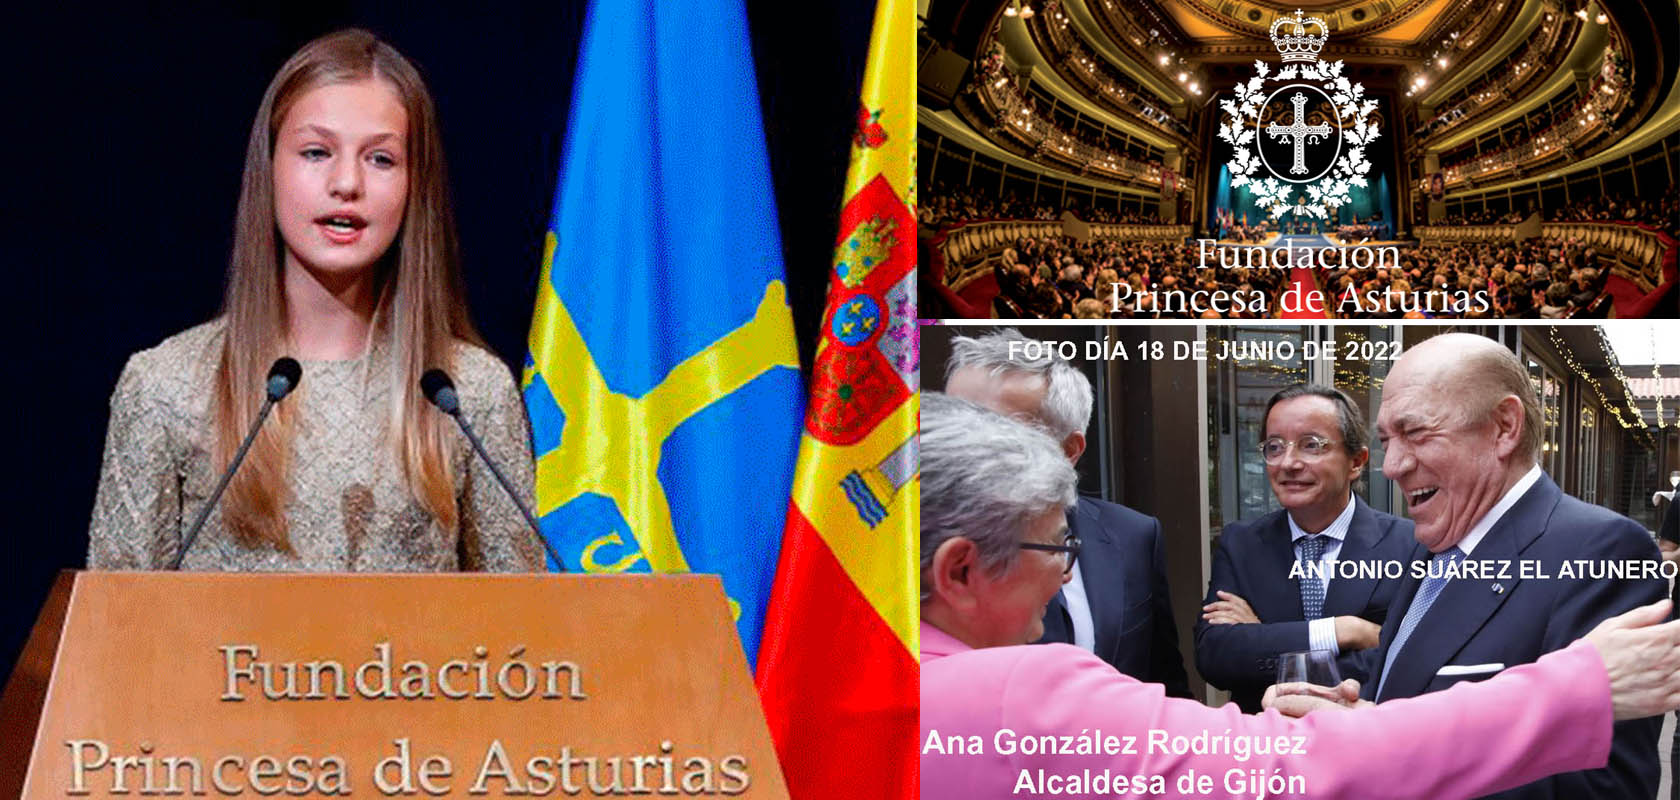 portada capitulo 1 fundacion princesa de asturias protector bajoindiciosdeactividadesilegalesanivelinternacional